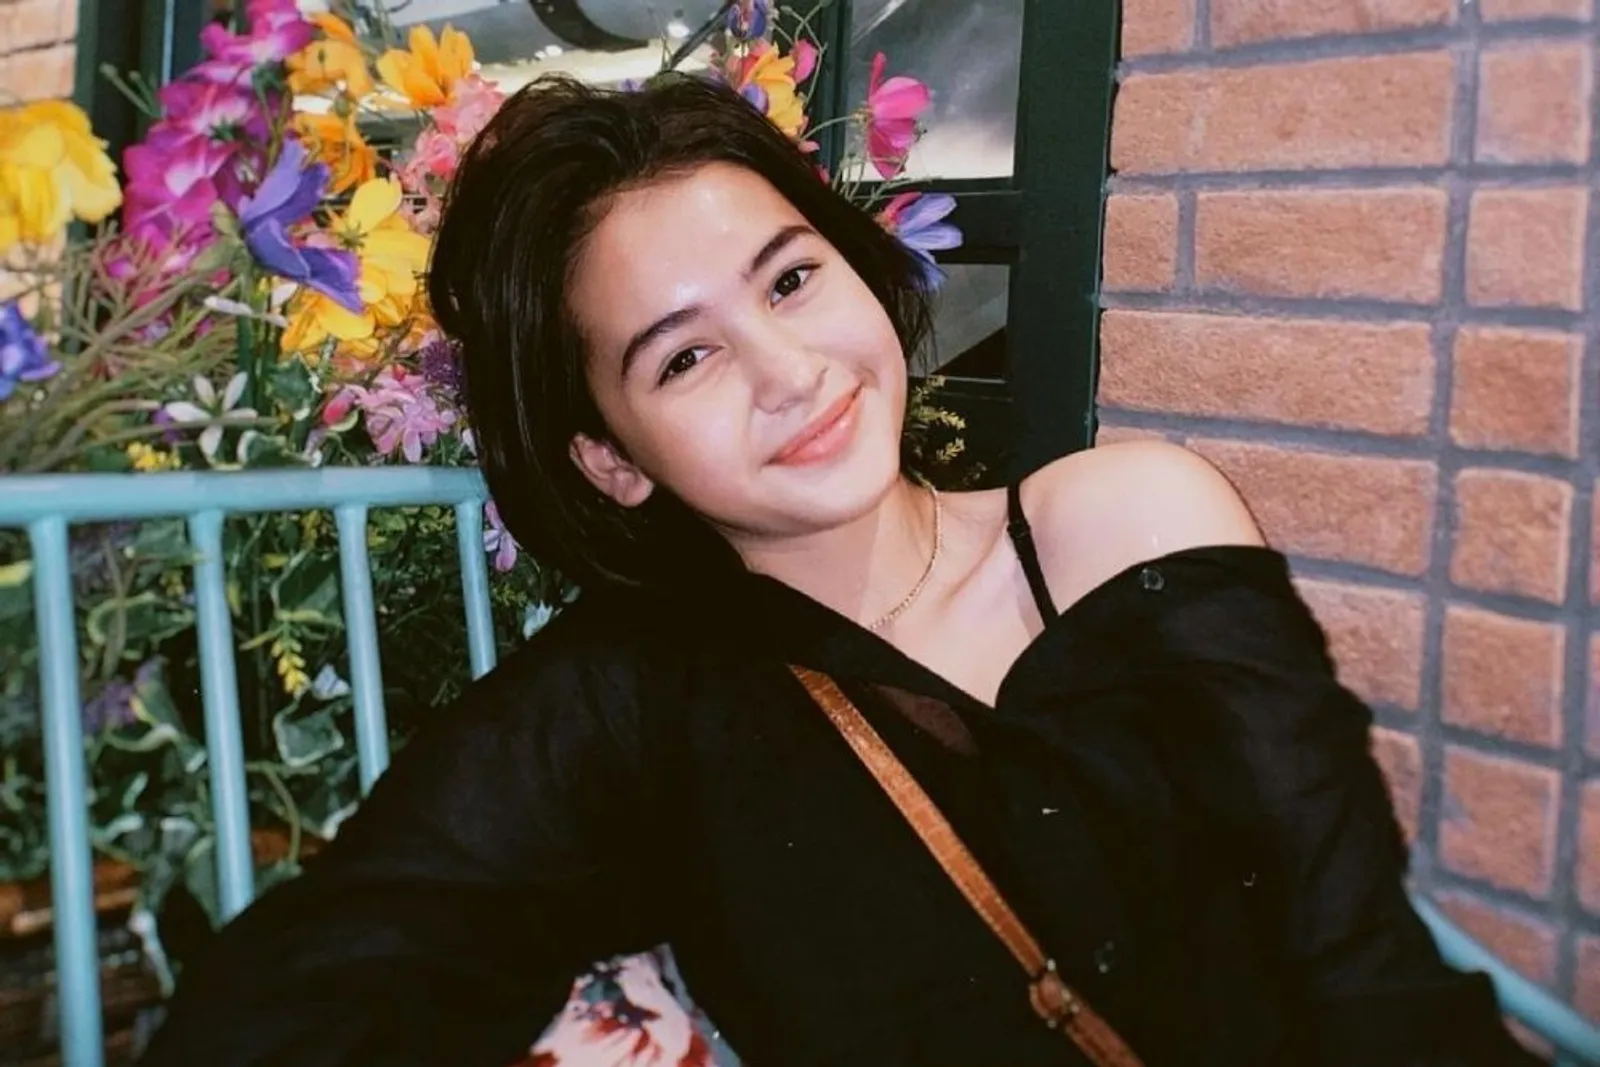 Potret Sandrinna Michelle di Media Sosial, Aktris 14 Tahun yang Kece